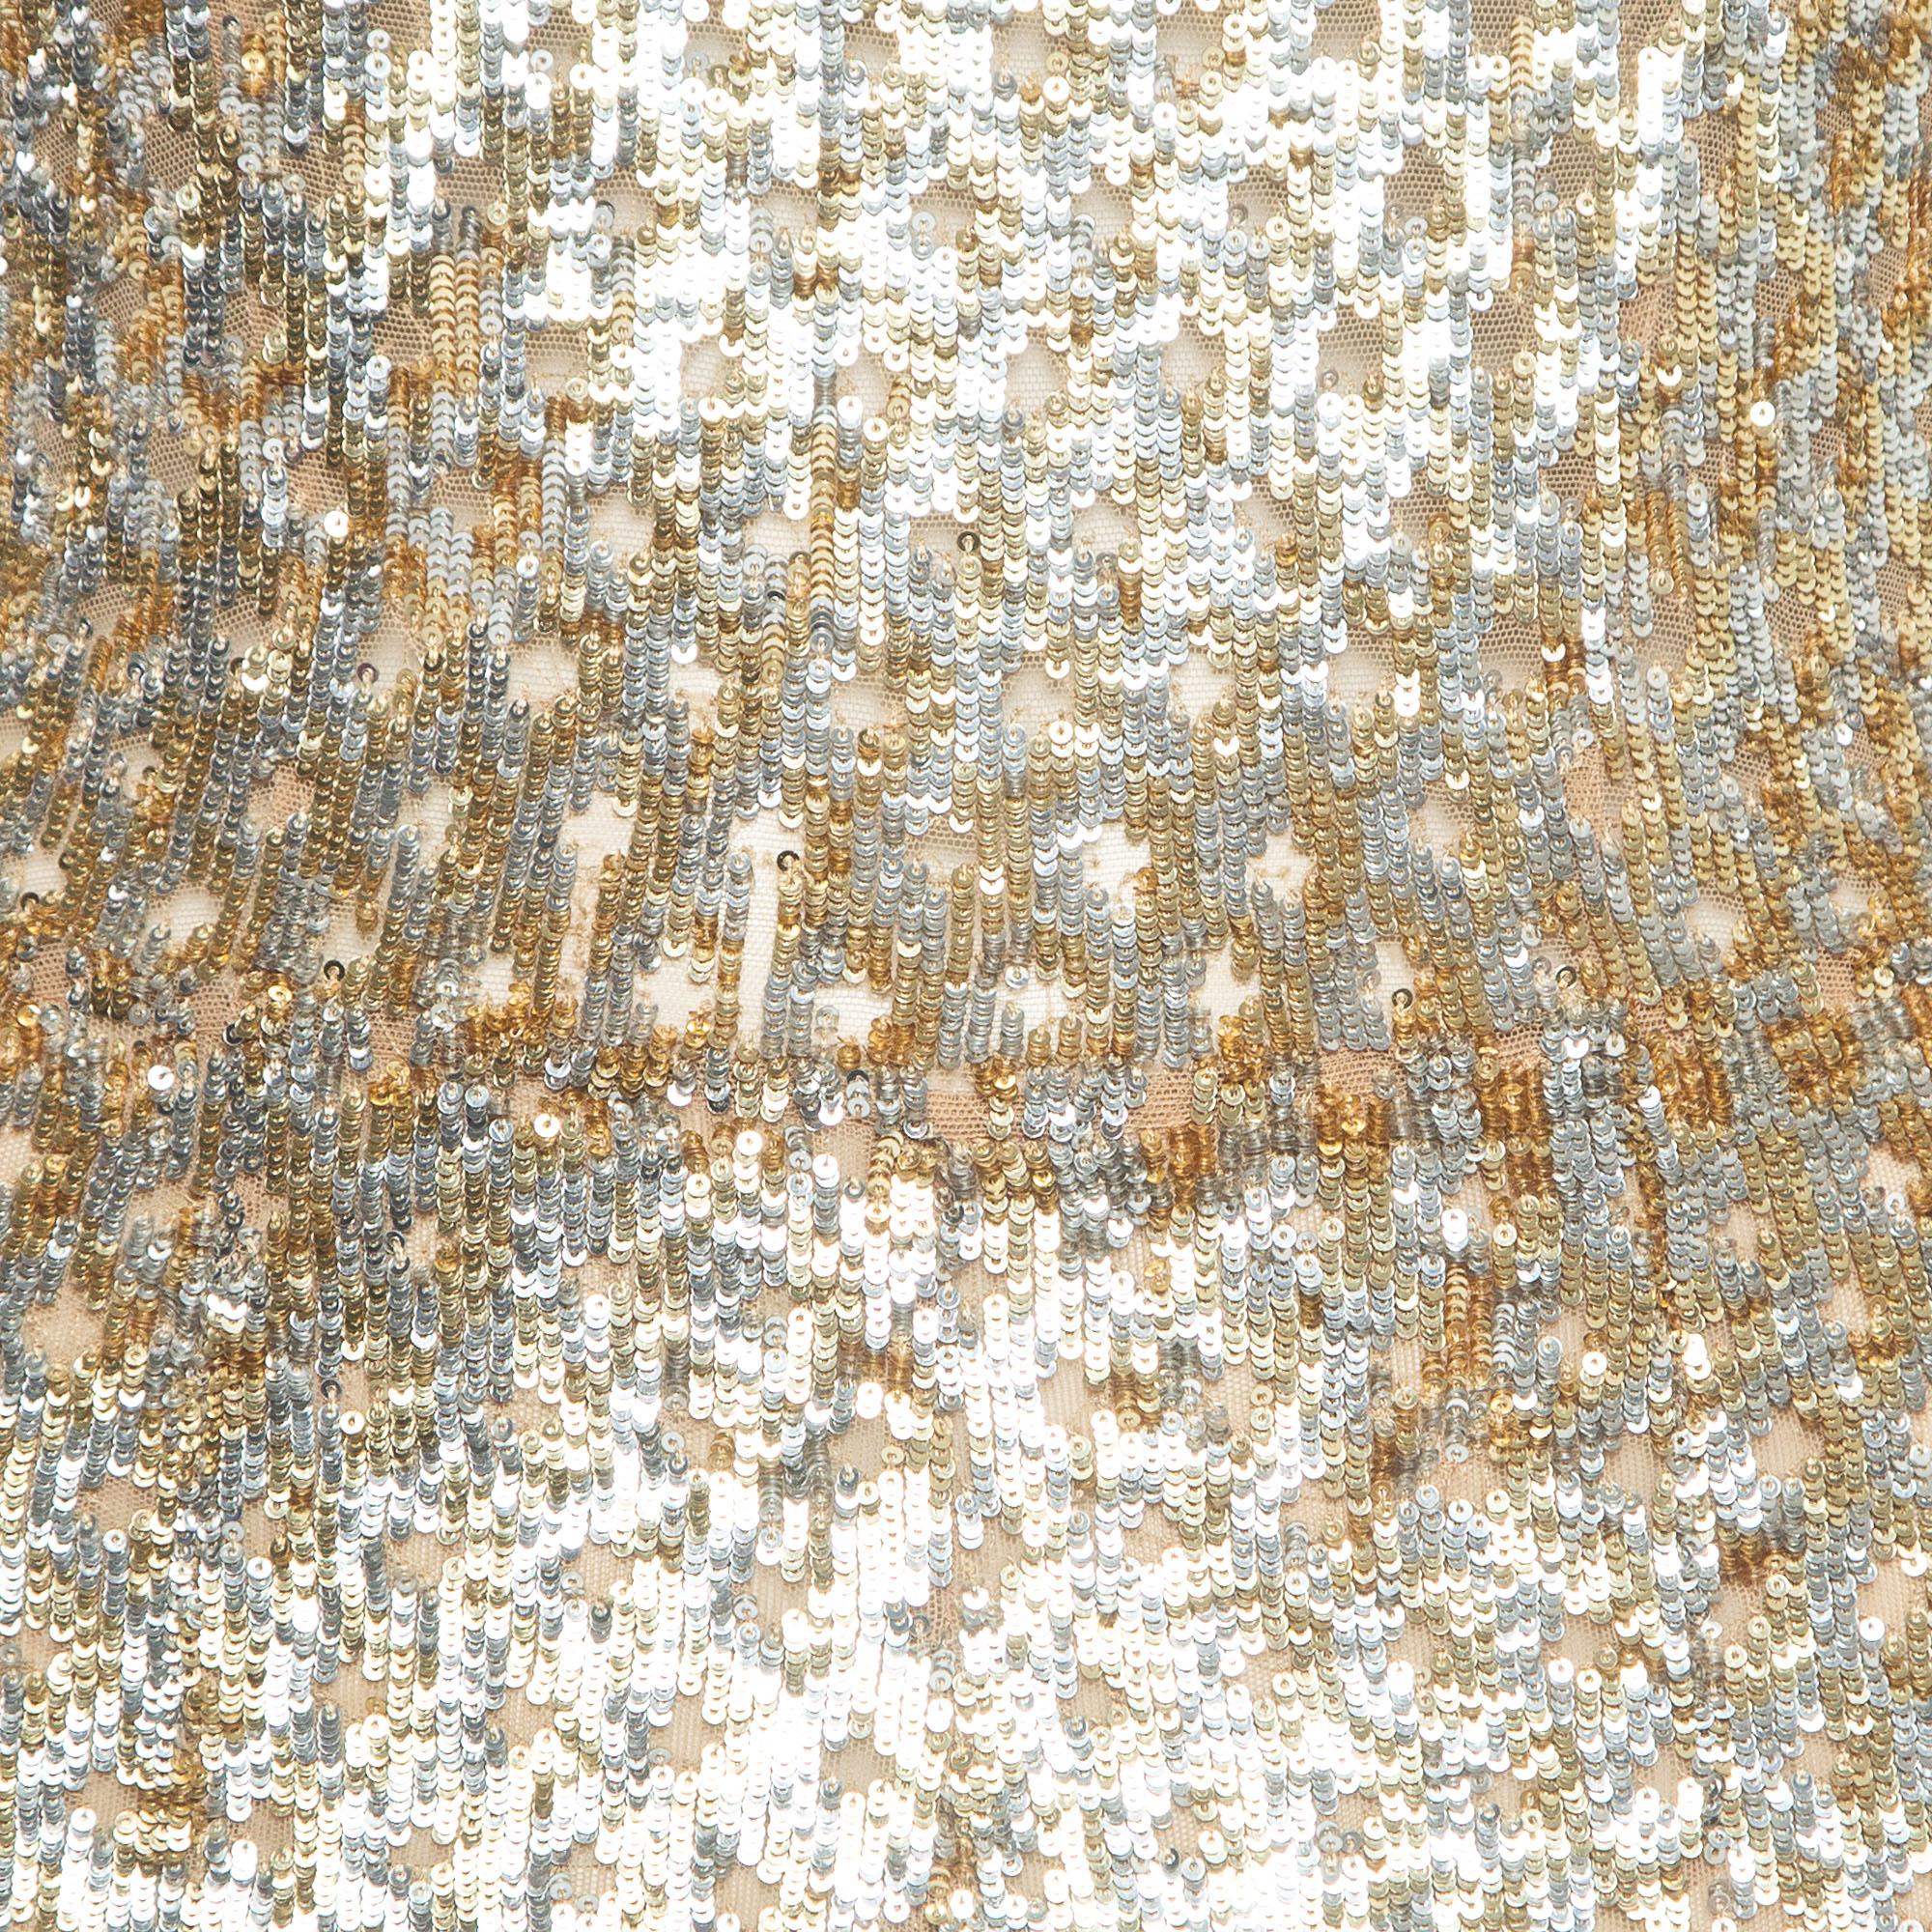 Michael Kors Gold Sequin Sleeveless Jumpsuit S For Sale 3